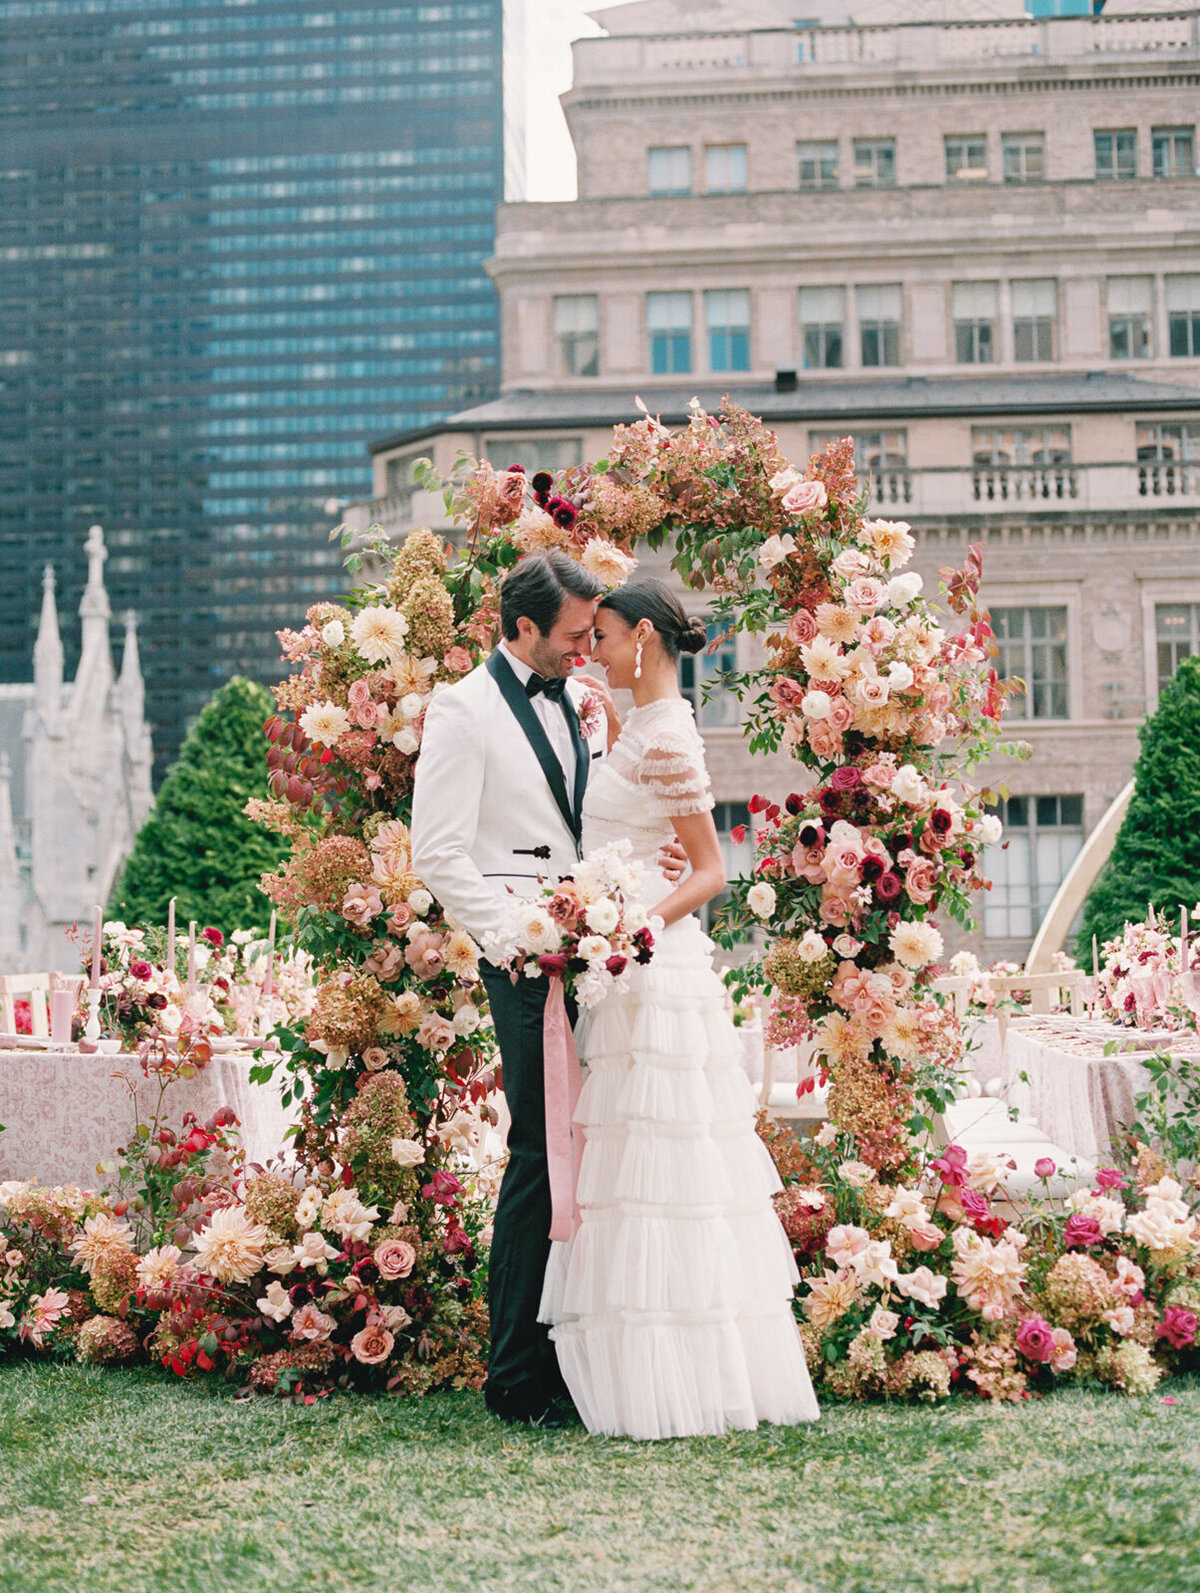 620 Loft & Garden Private Penthouse Wedding - New York City - Stephanie Michelle Photography - Britt Jones Co-110